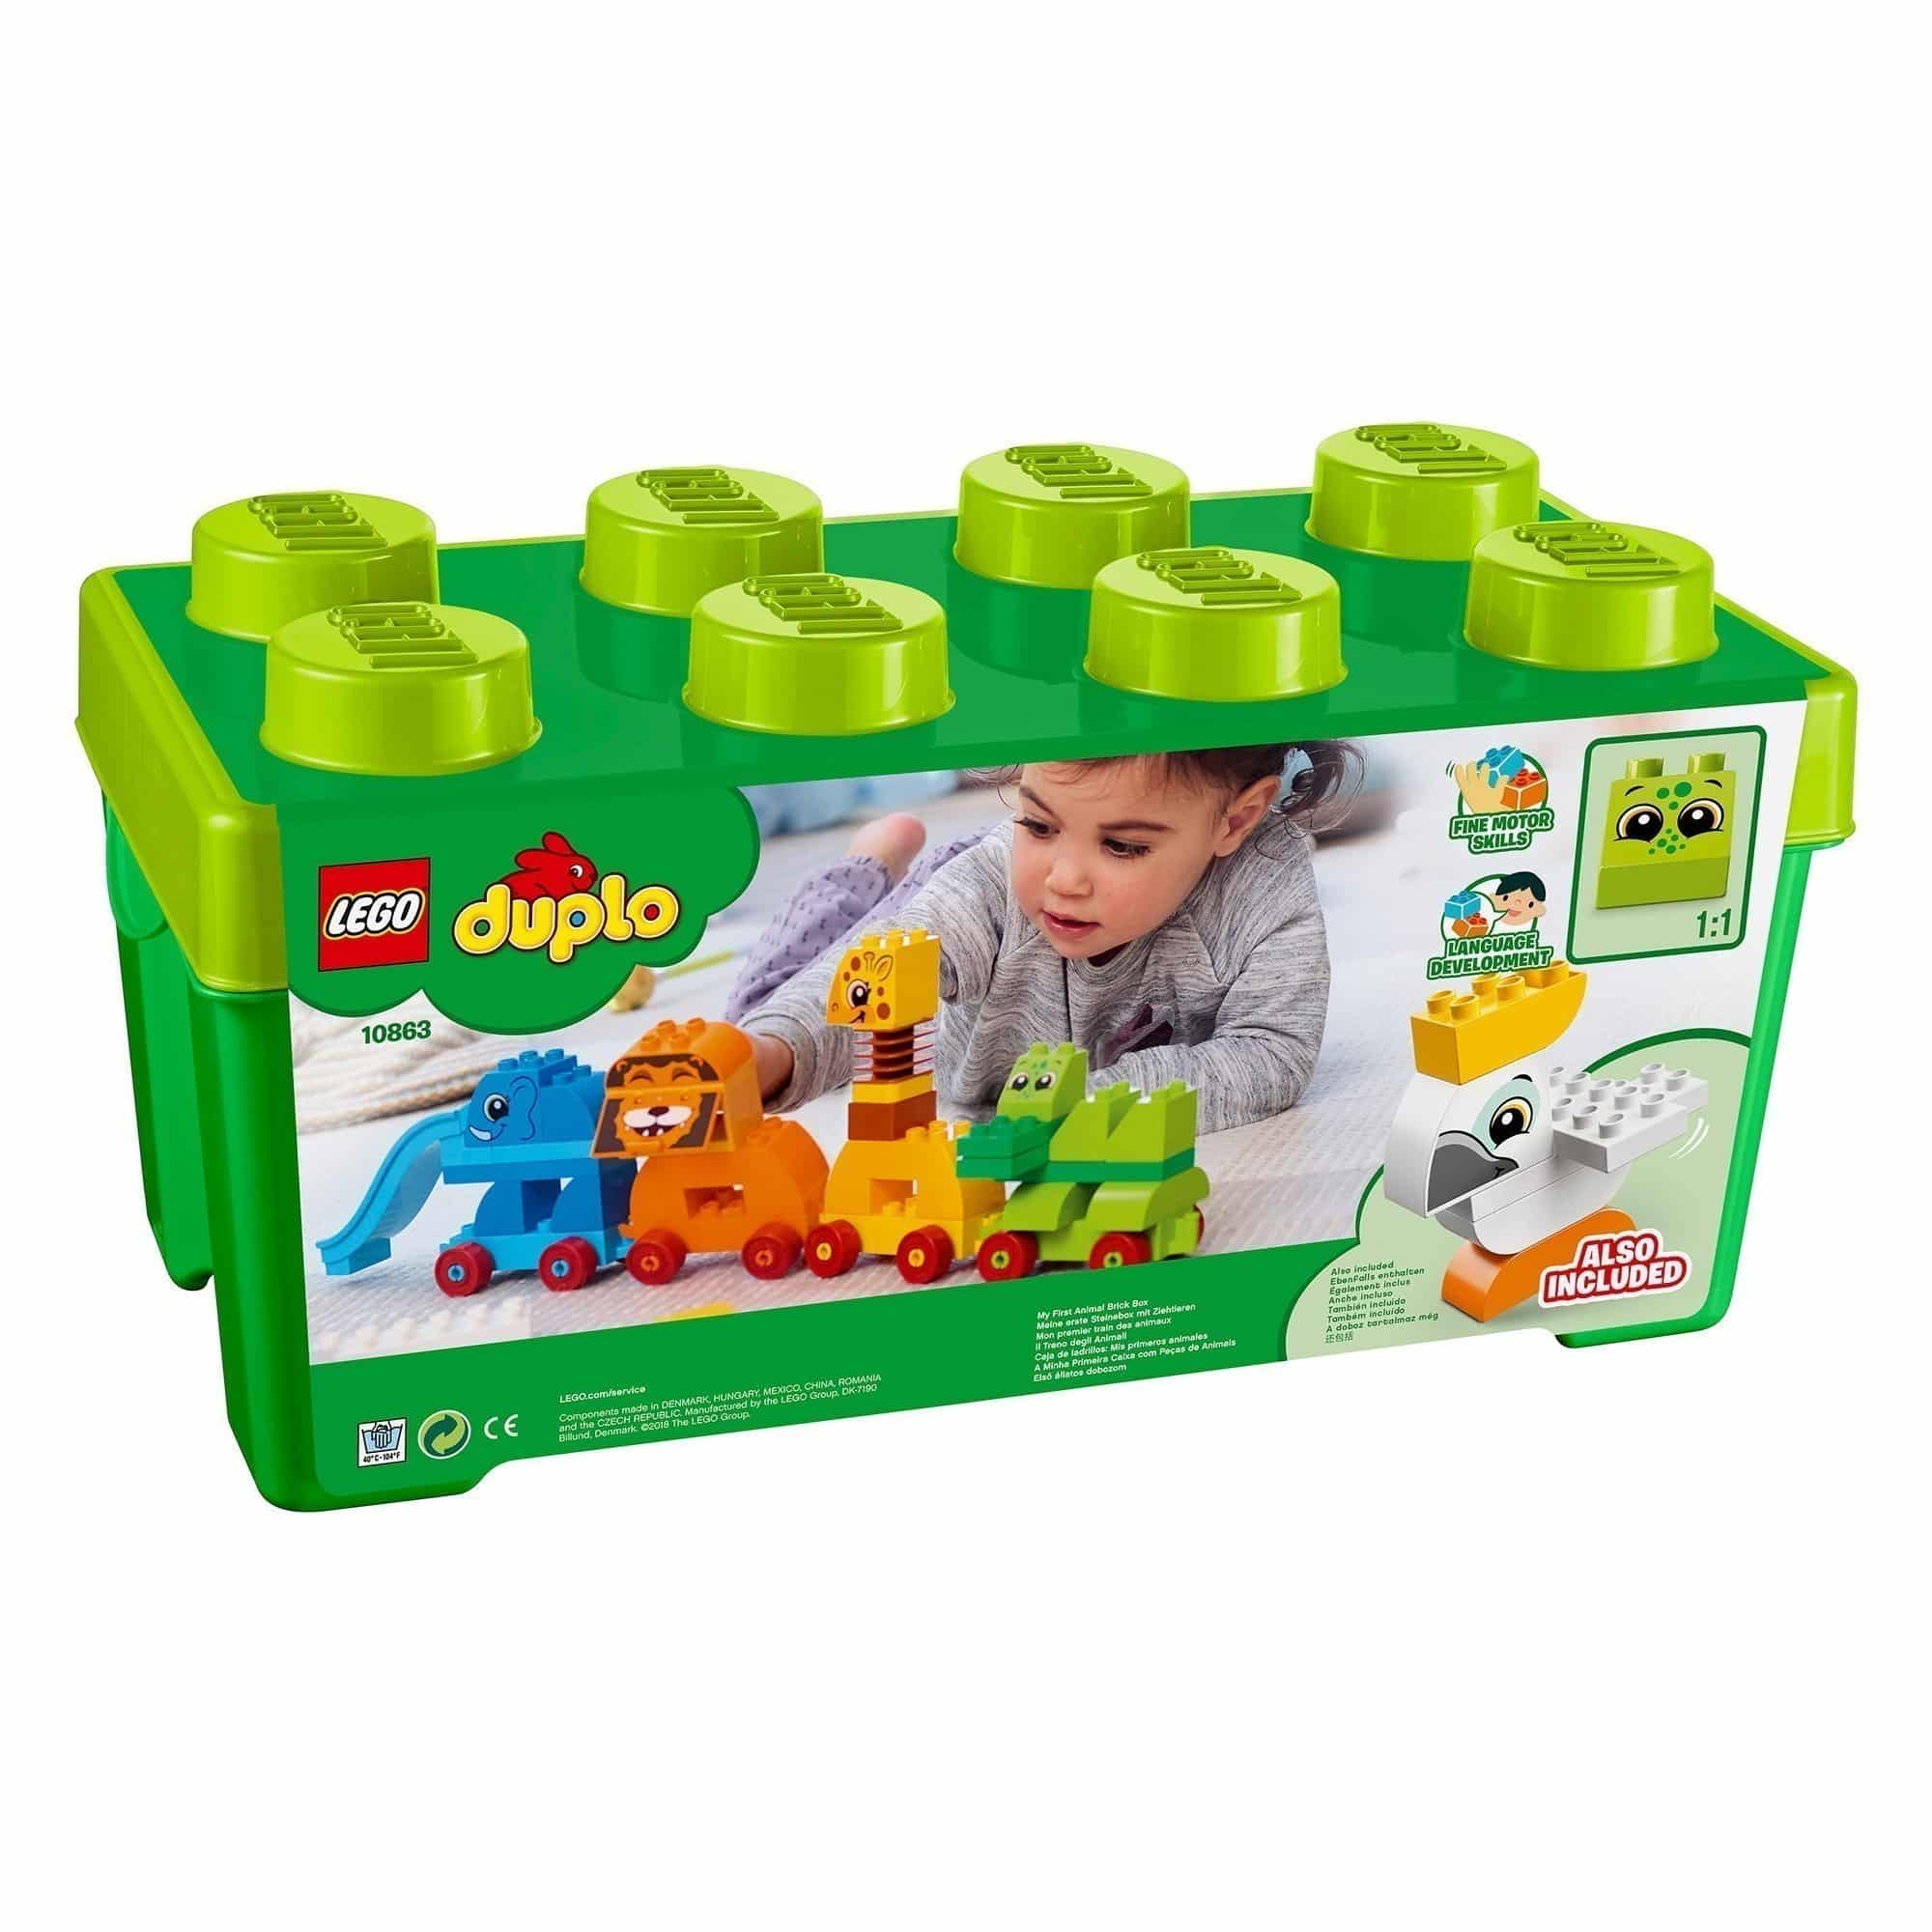 LEGO® DUPLO 10863 - My First Animal Brick Box